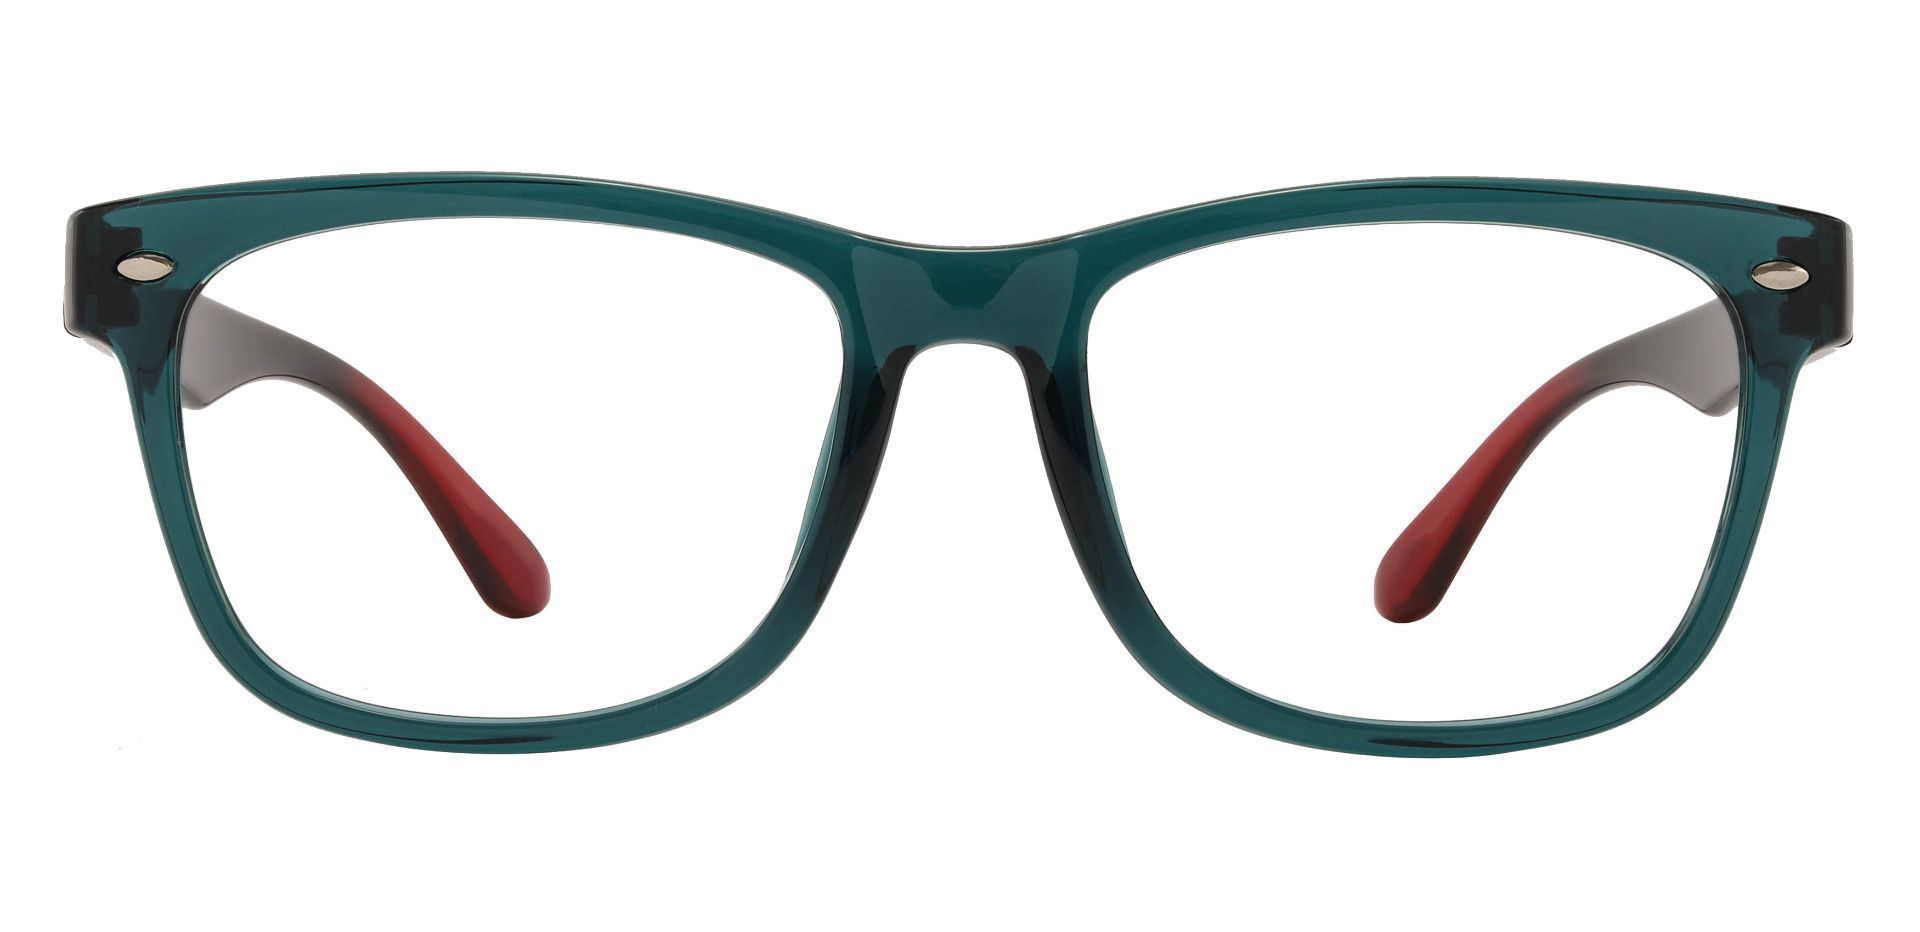 Oscar Rectangle Eyeglasses Frame - Green